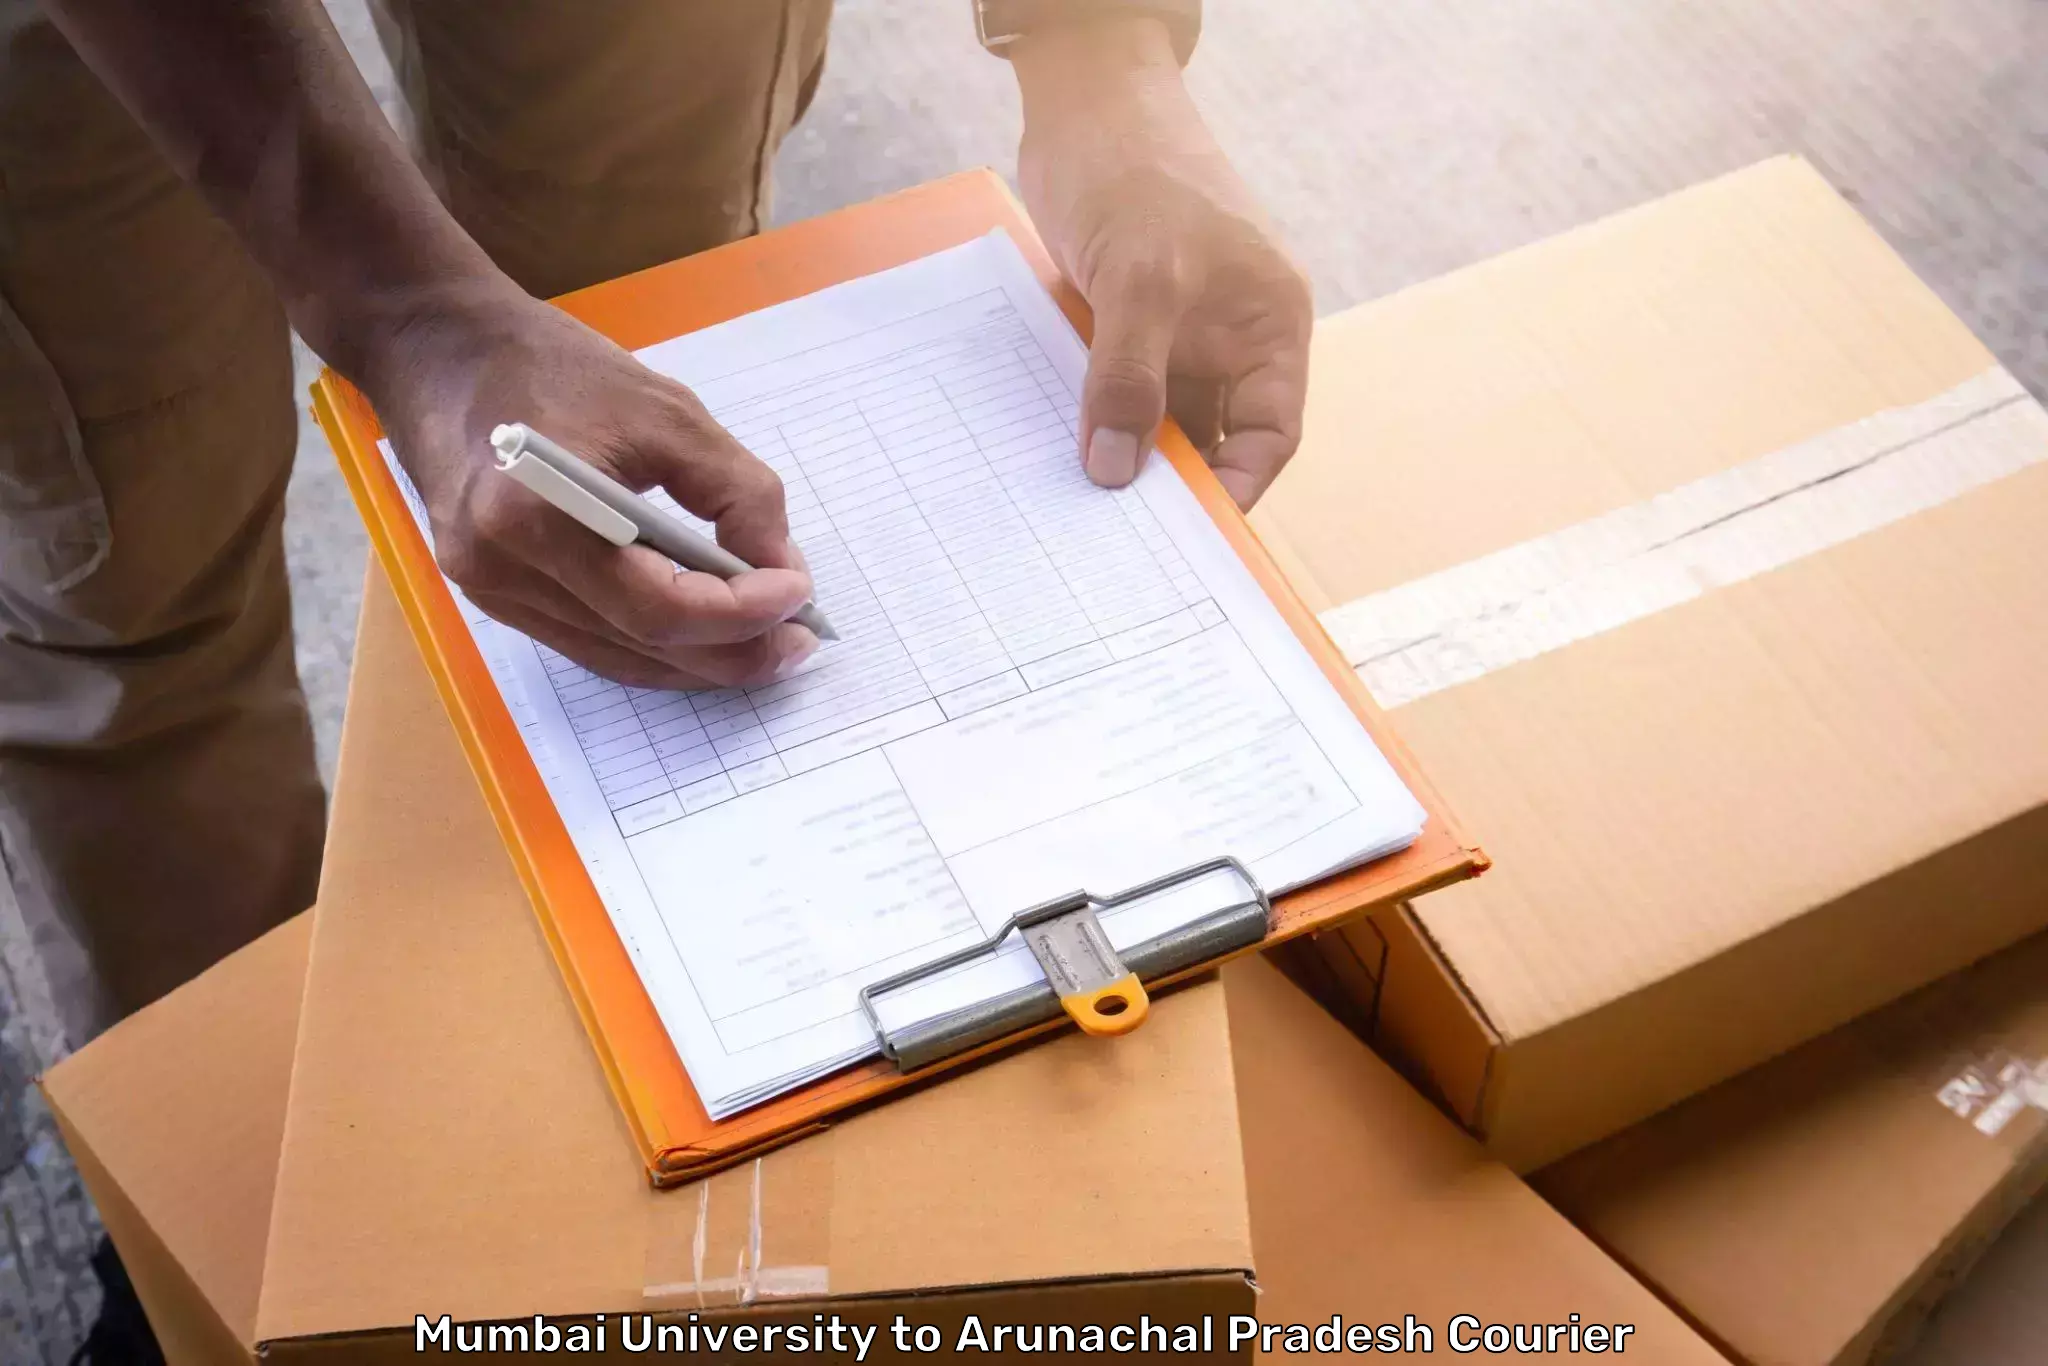 Baggage relocation service Mumbai University to Likabali